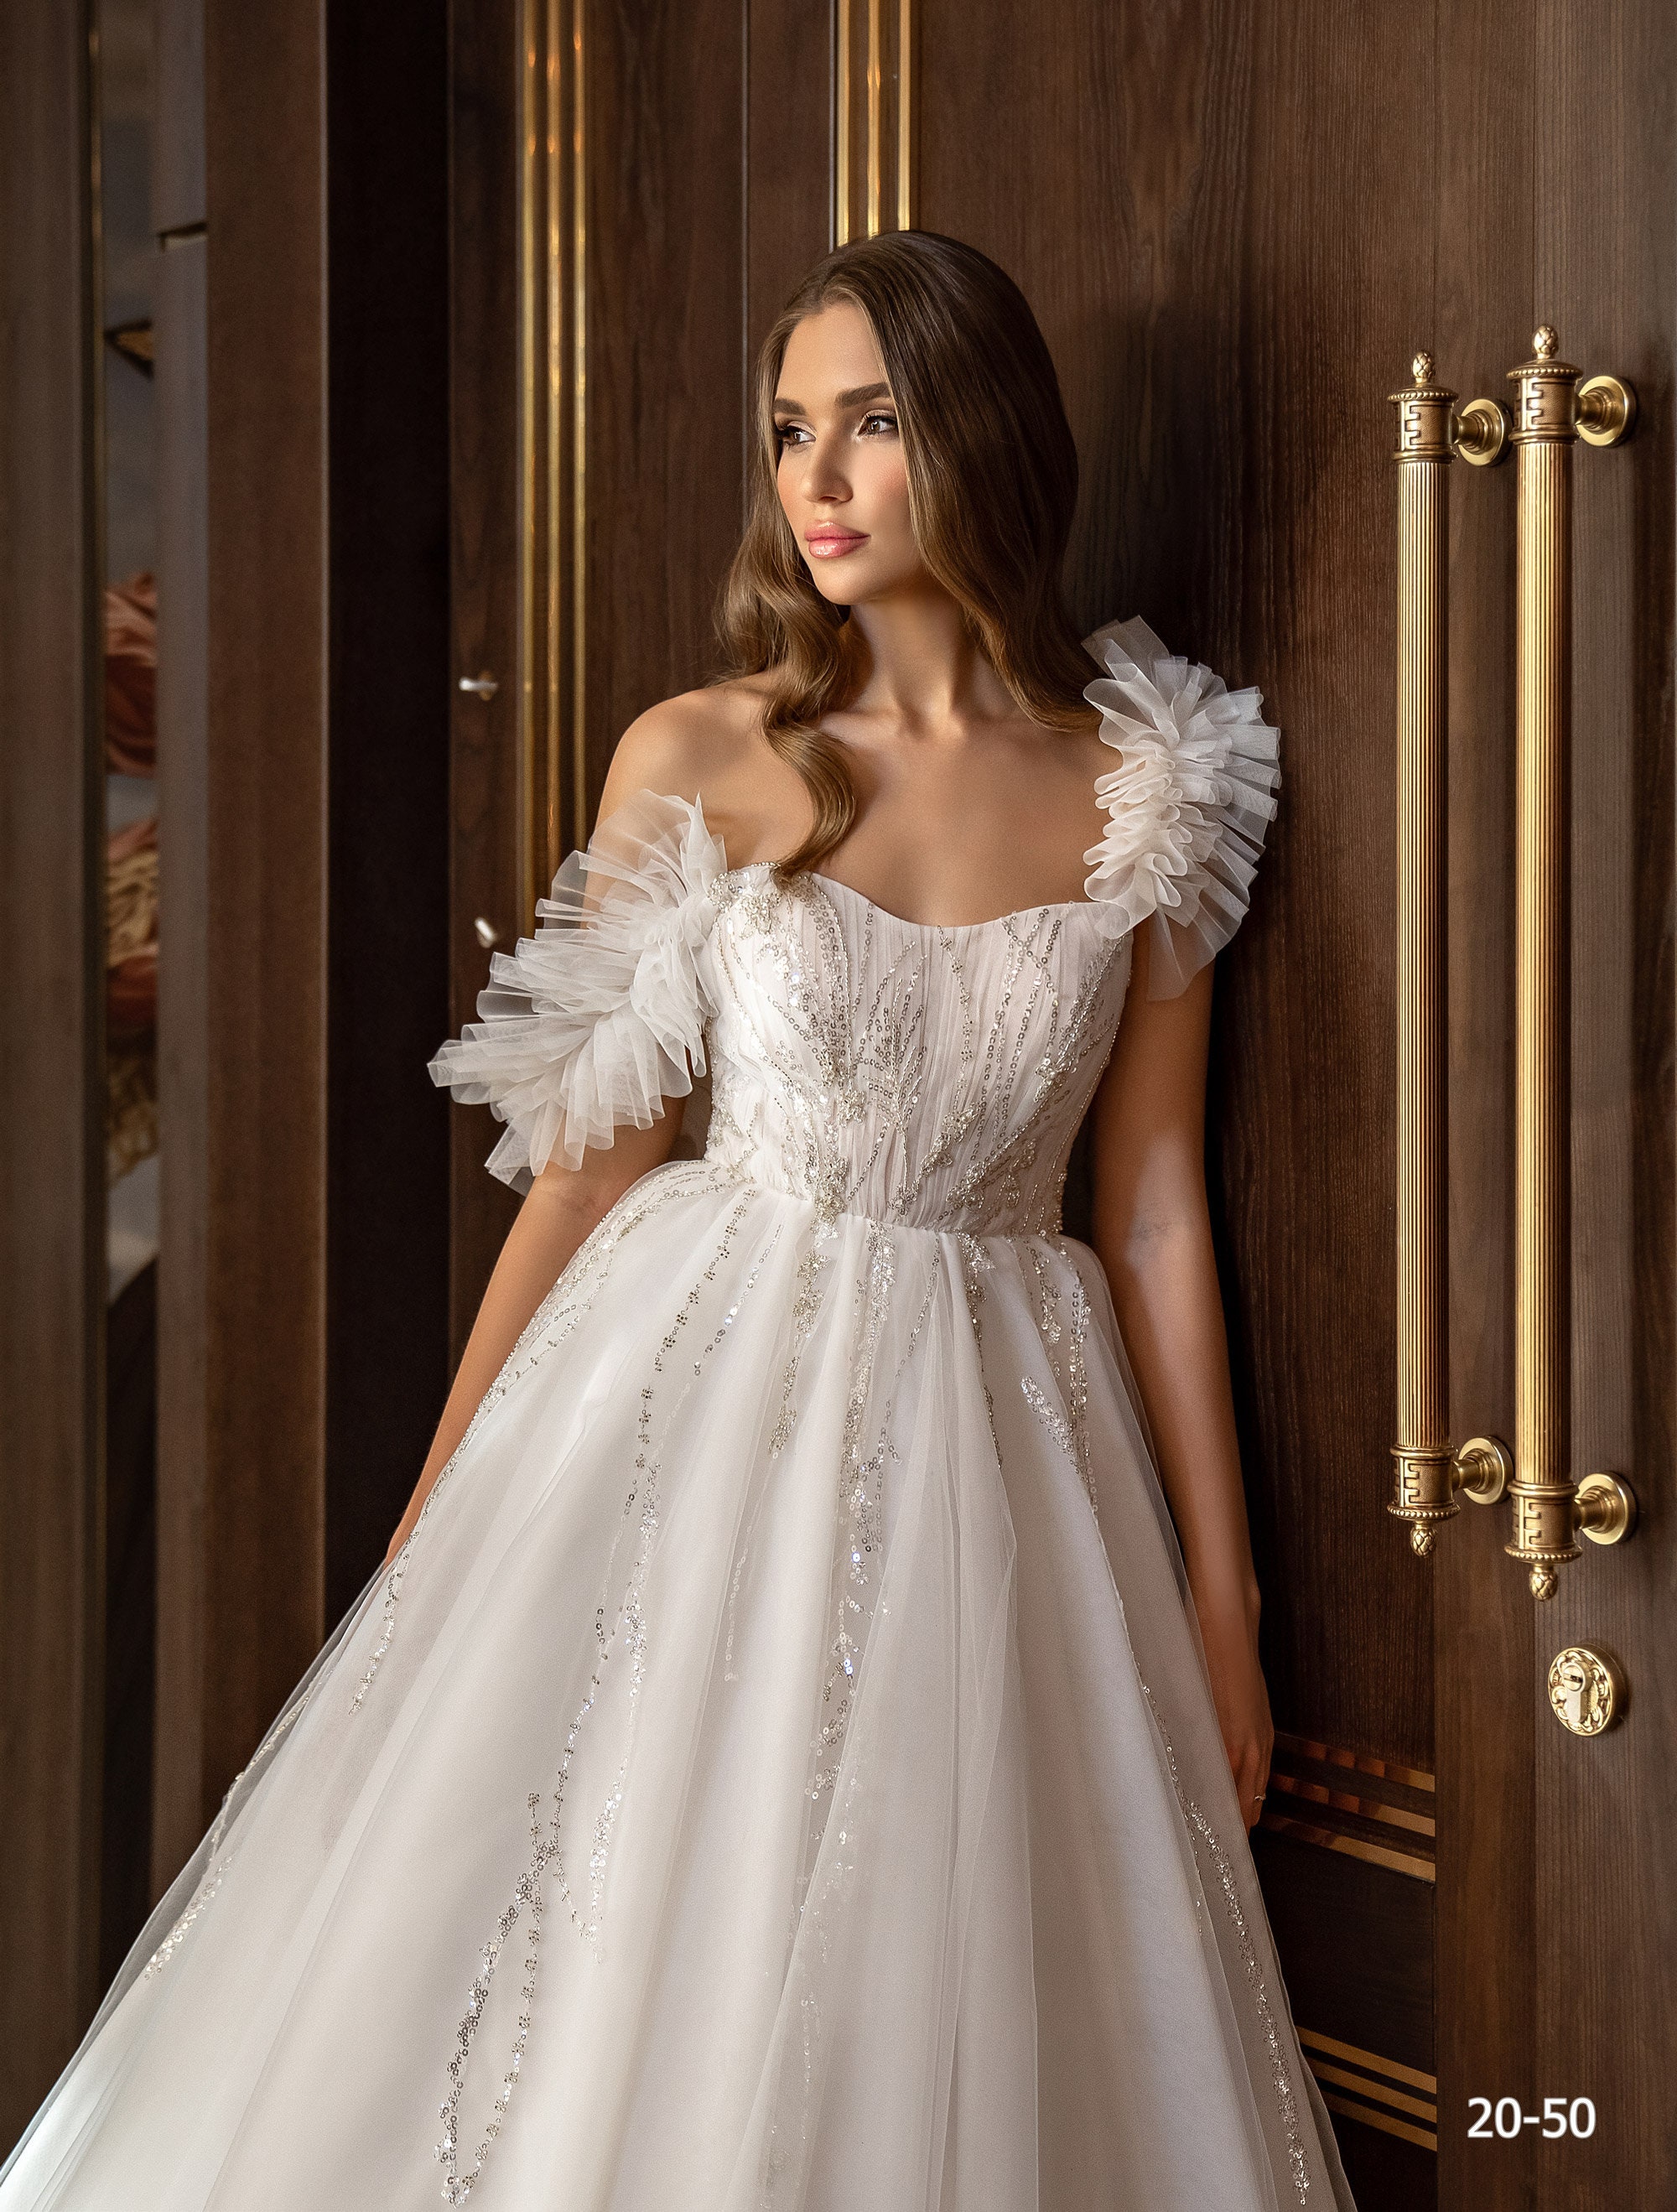 Lace wedding dress Solange A line wedding dress sequins | Etsy